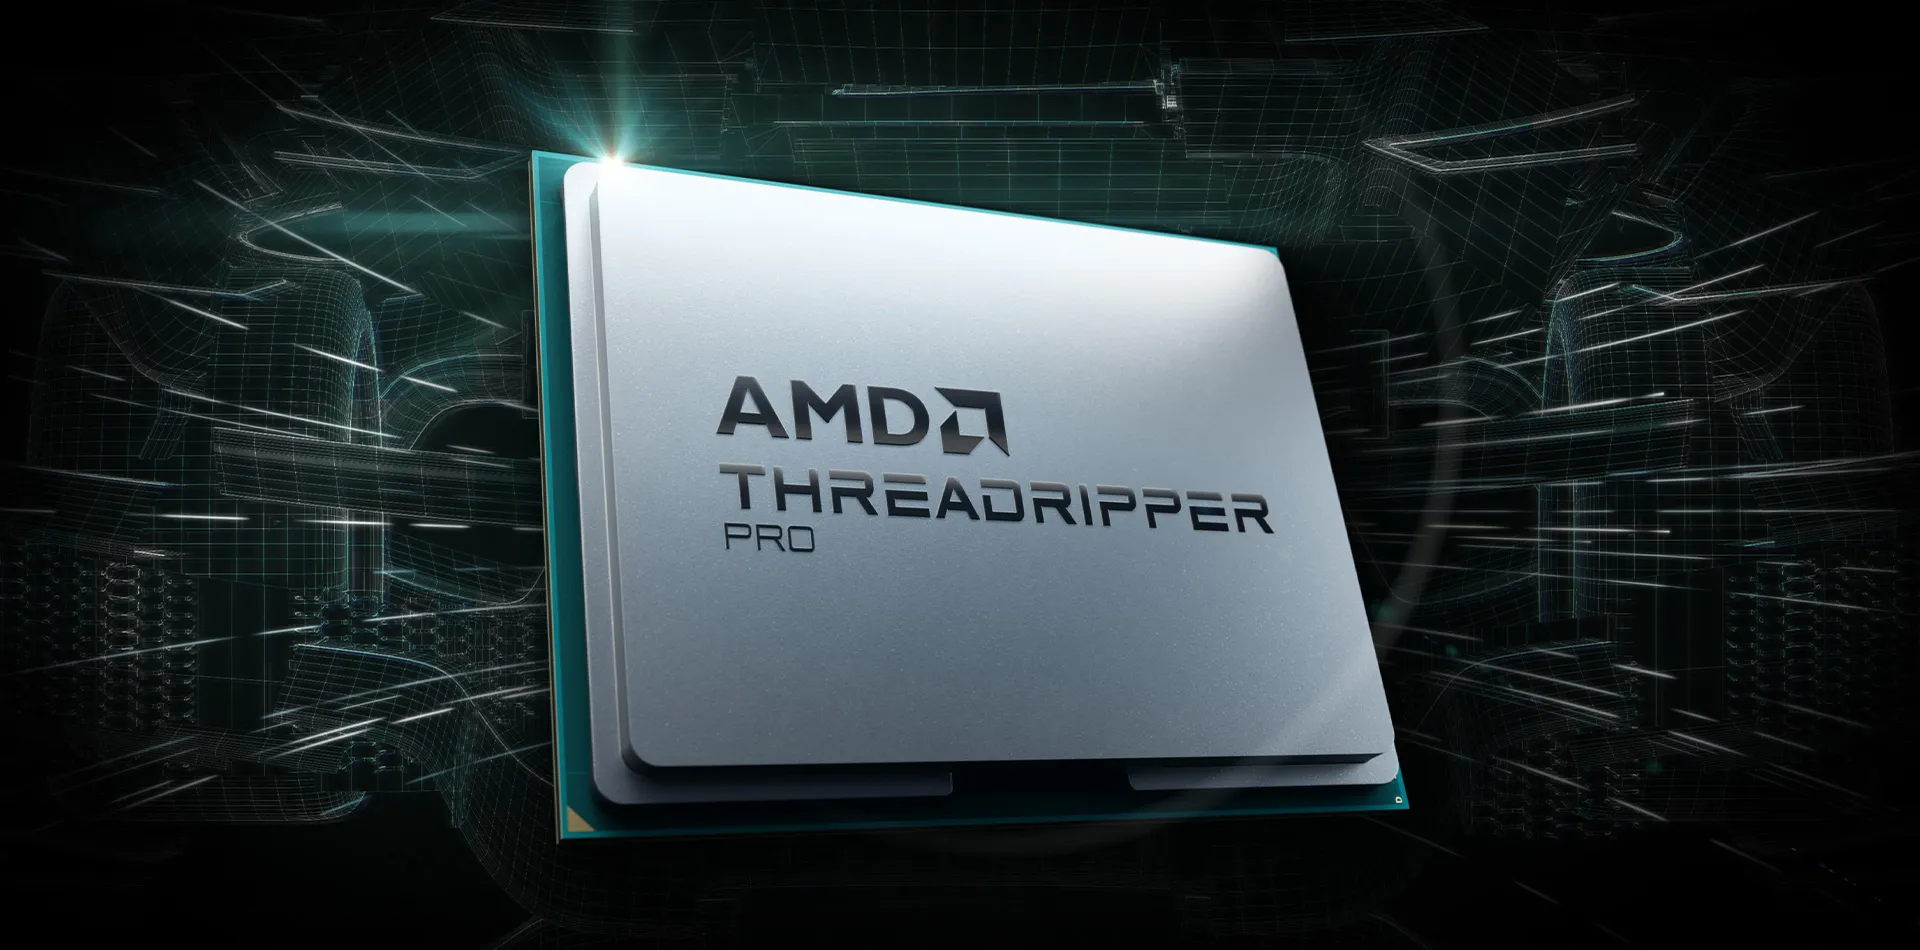 AMD Threadripper PRO